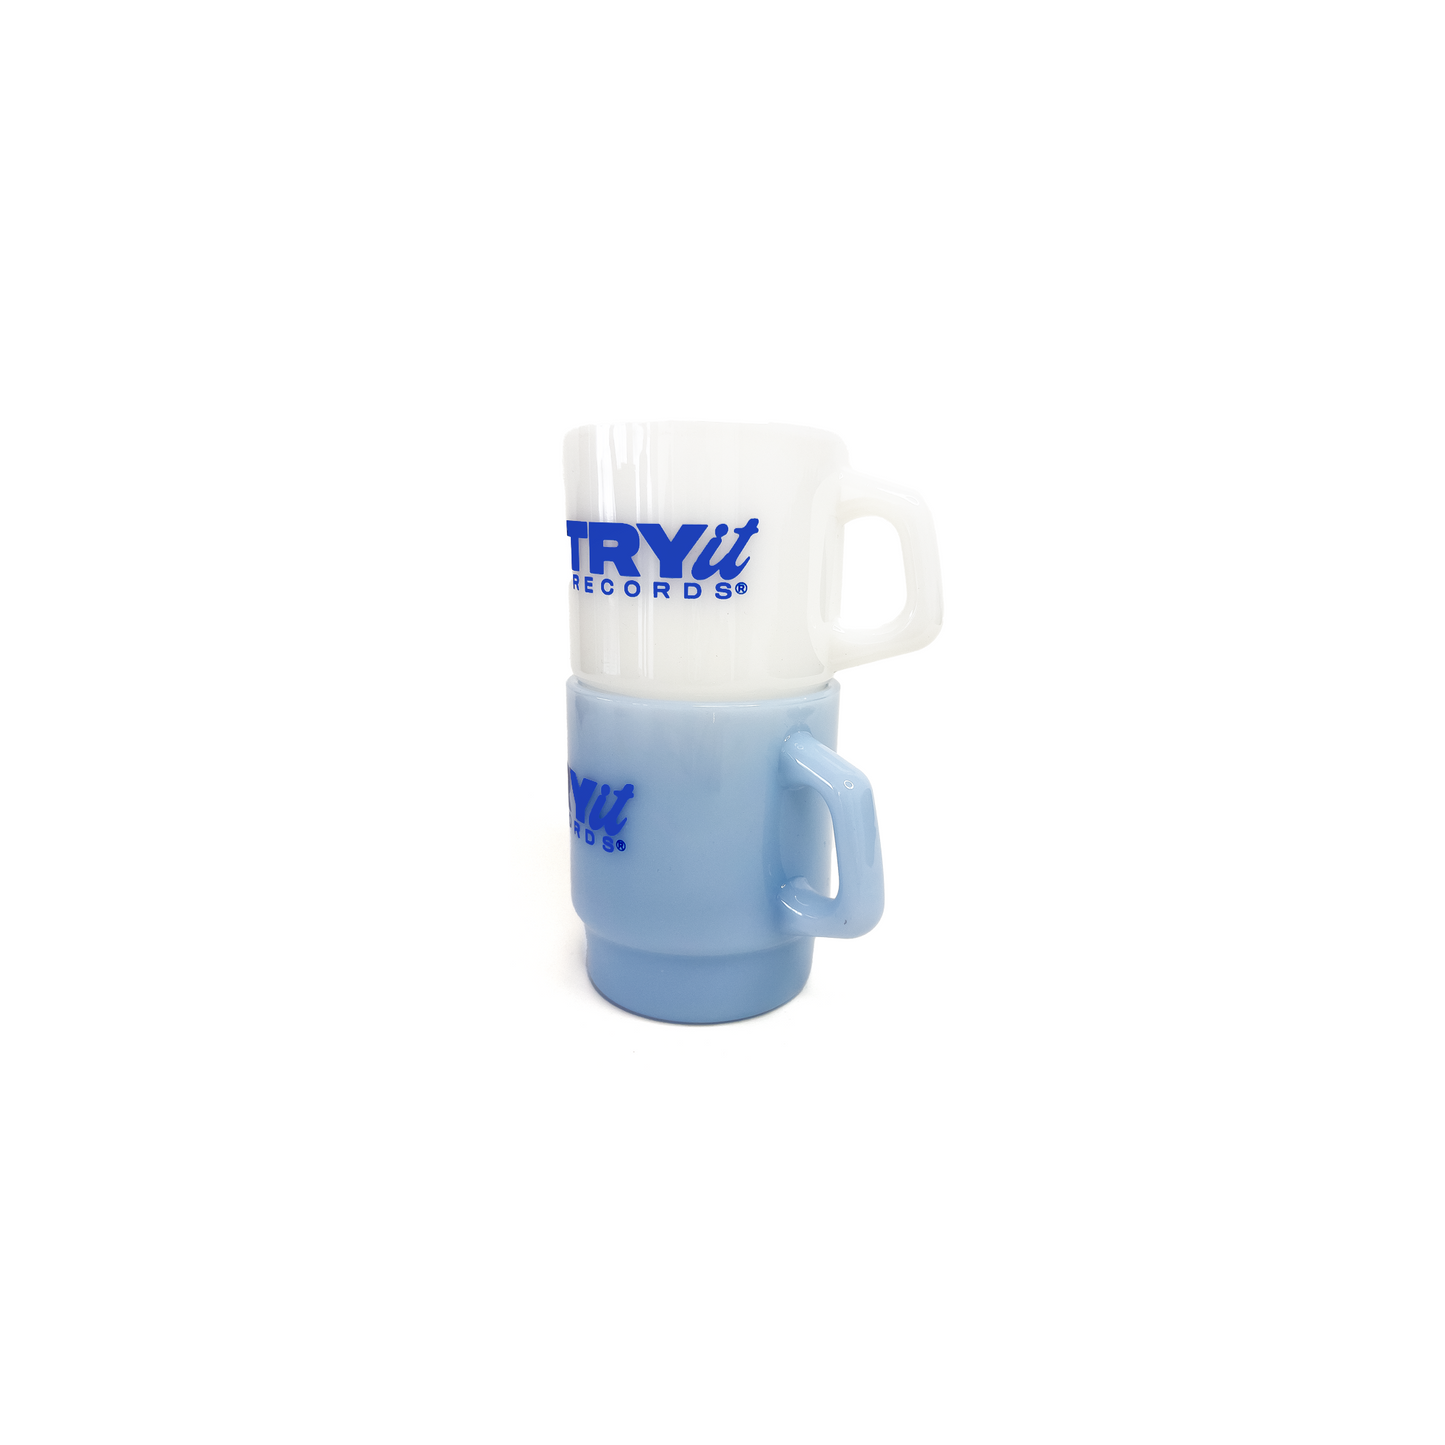 Try it Records Milk Glass Mug Set